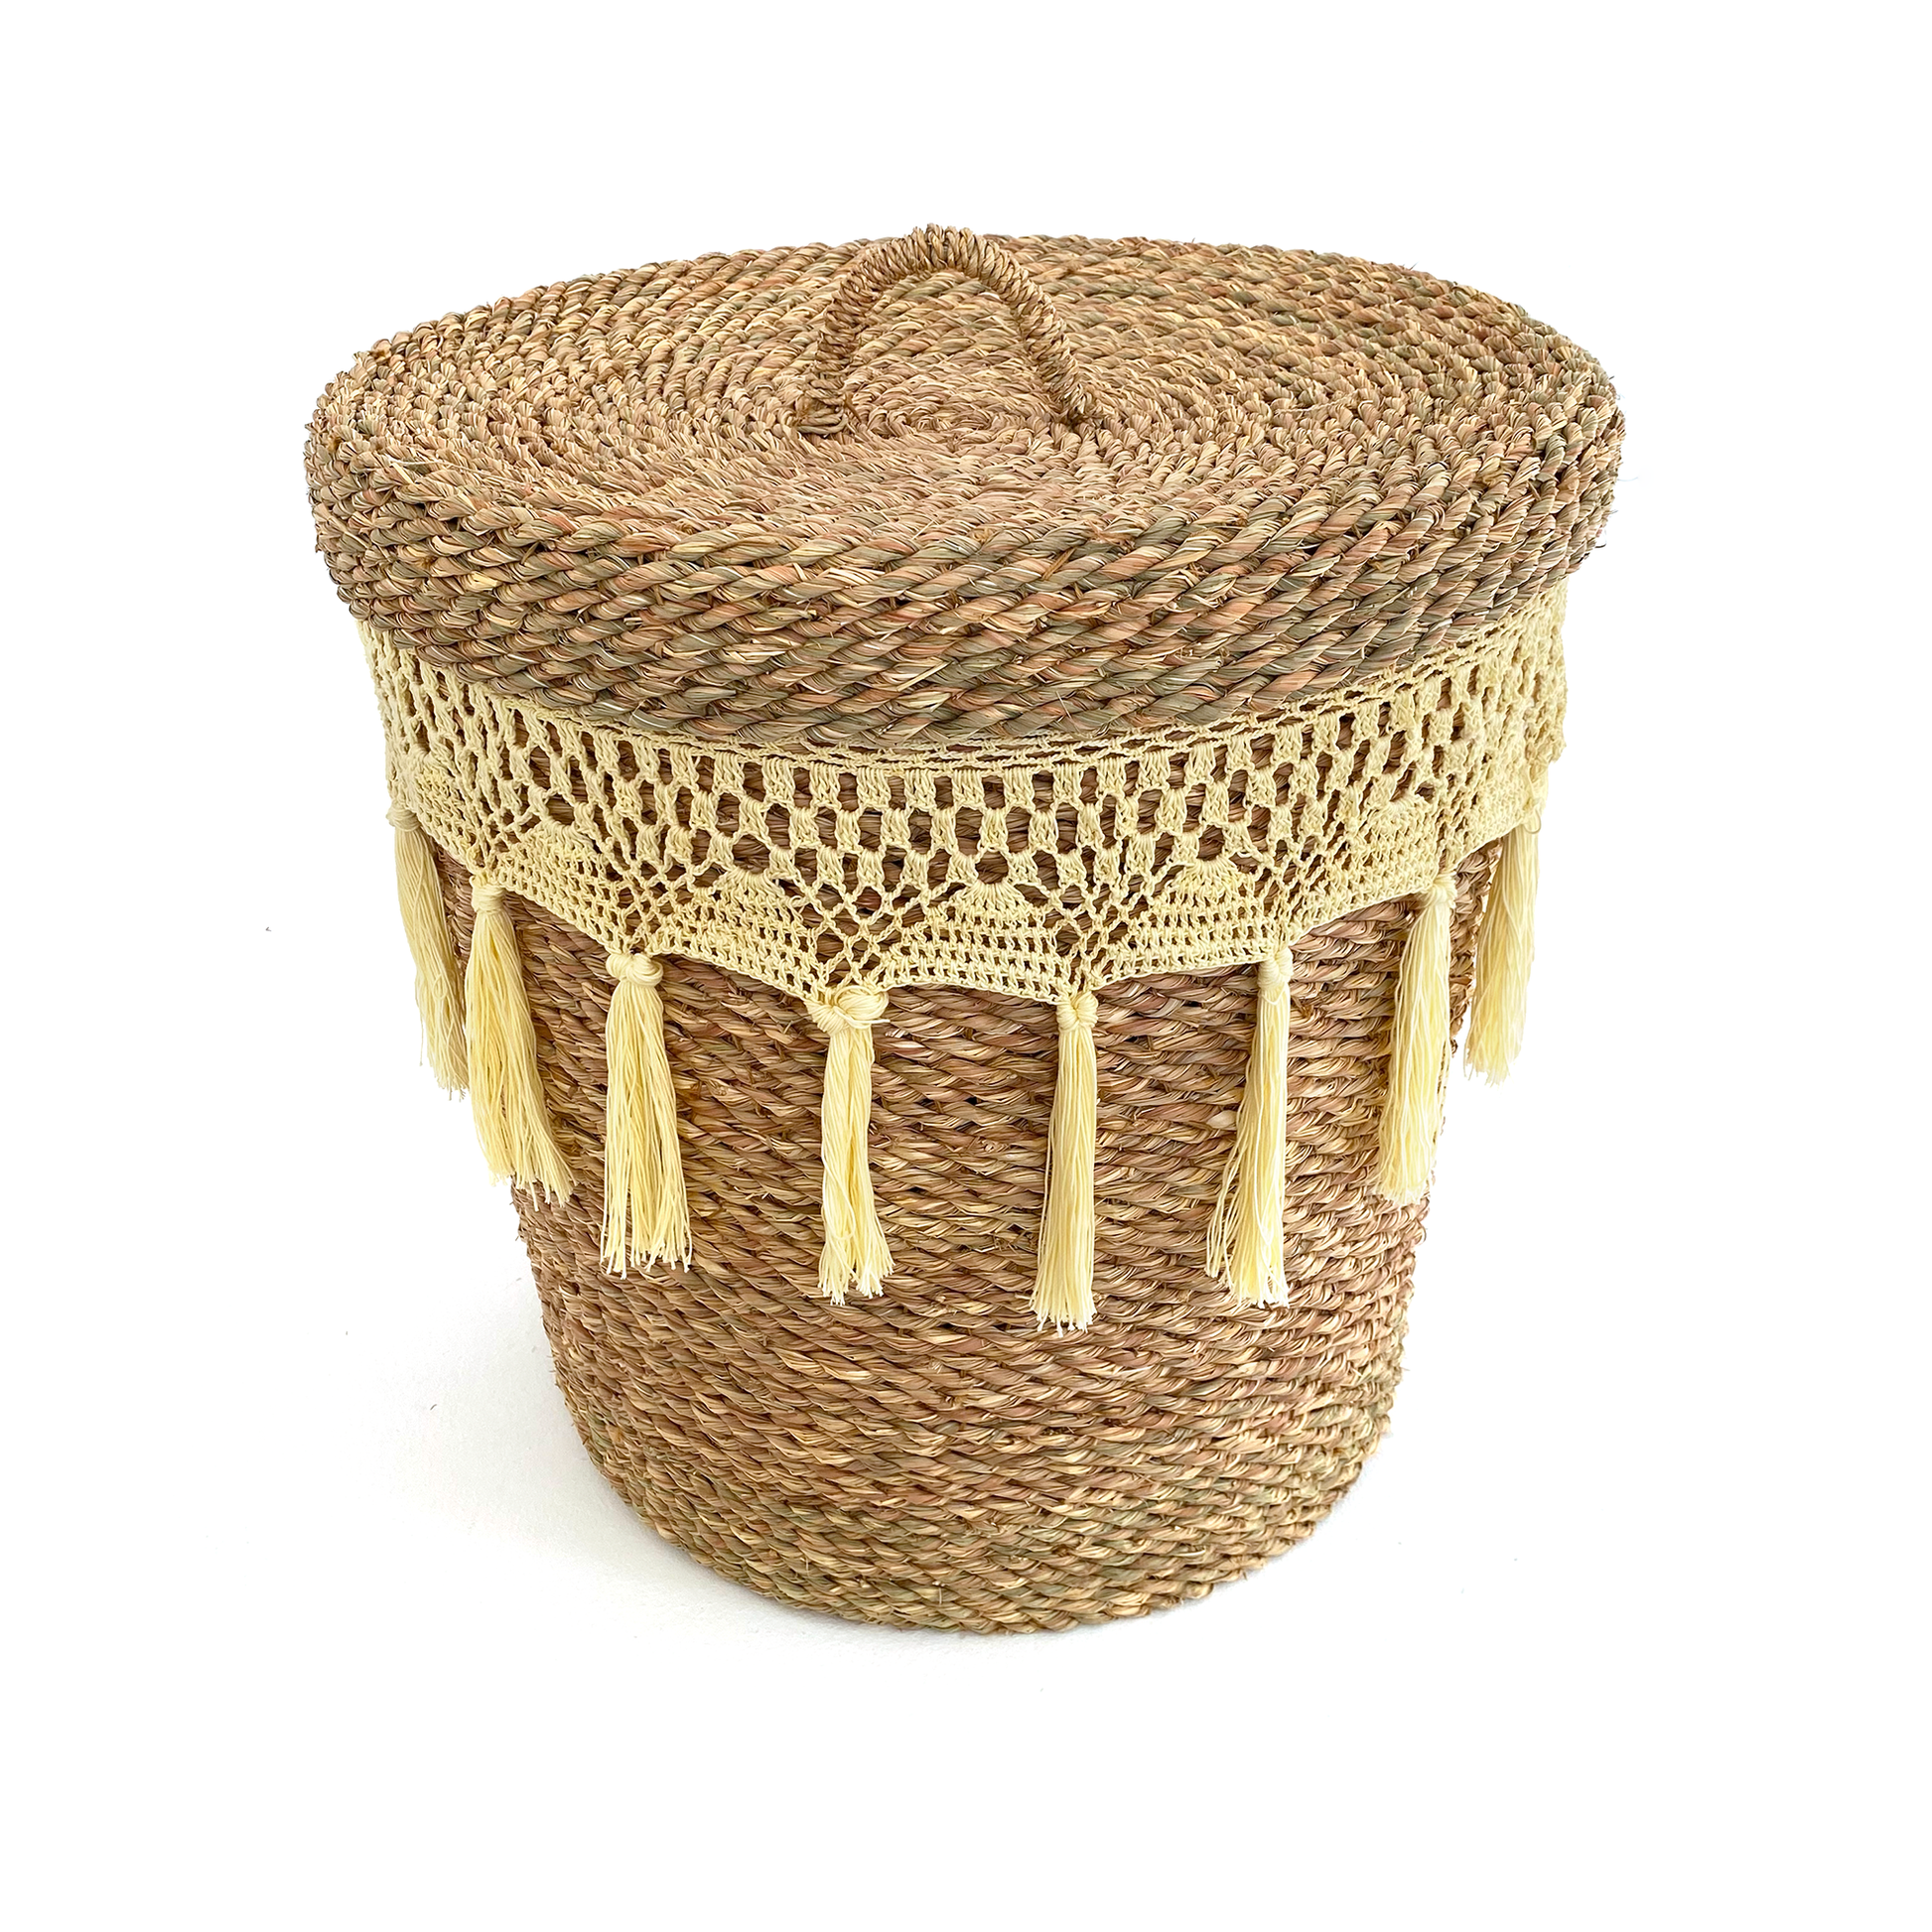 Halfa laundry basket with lid, crocheted. سلة حلفا للغسيل بغطاء مع كروشيه